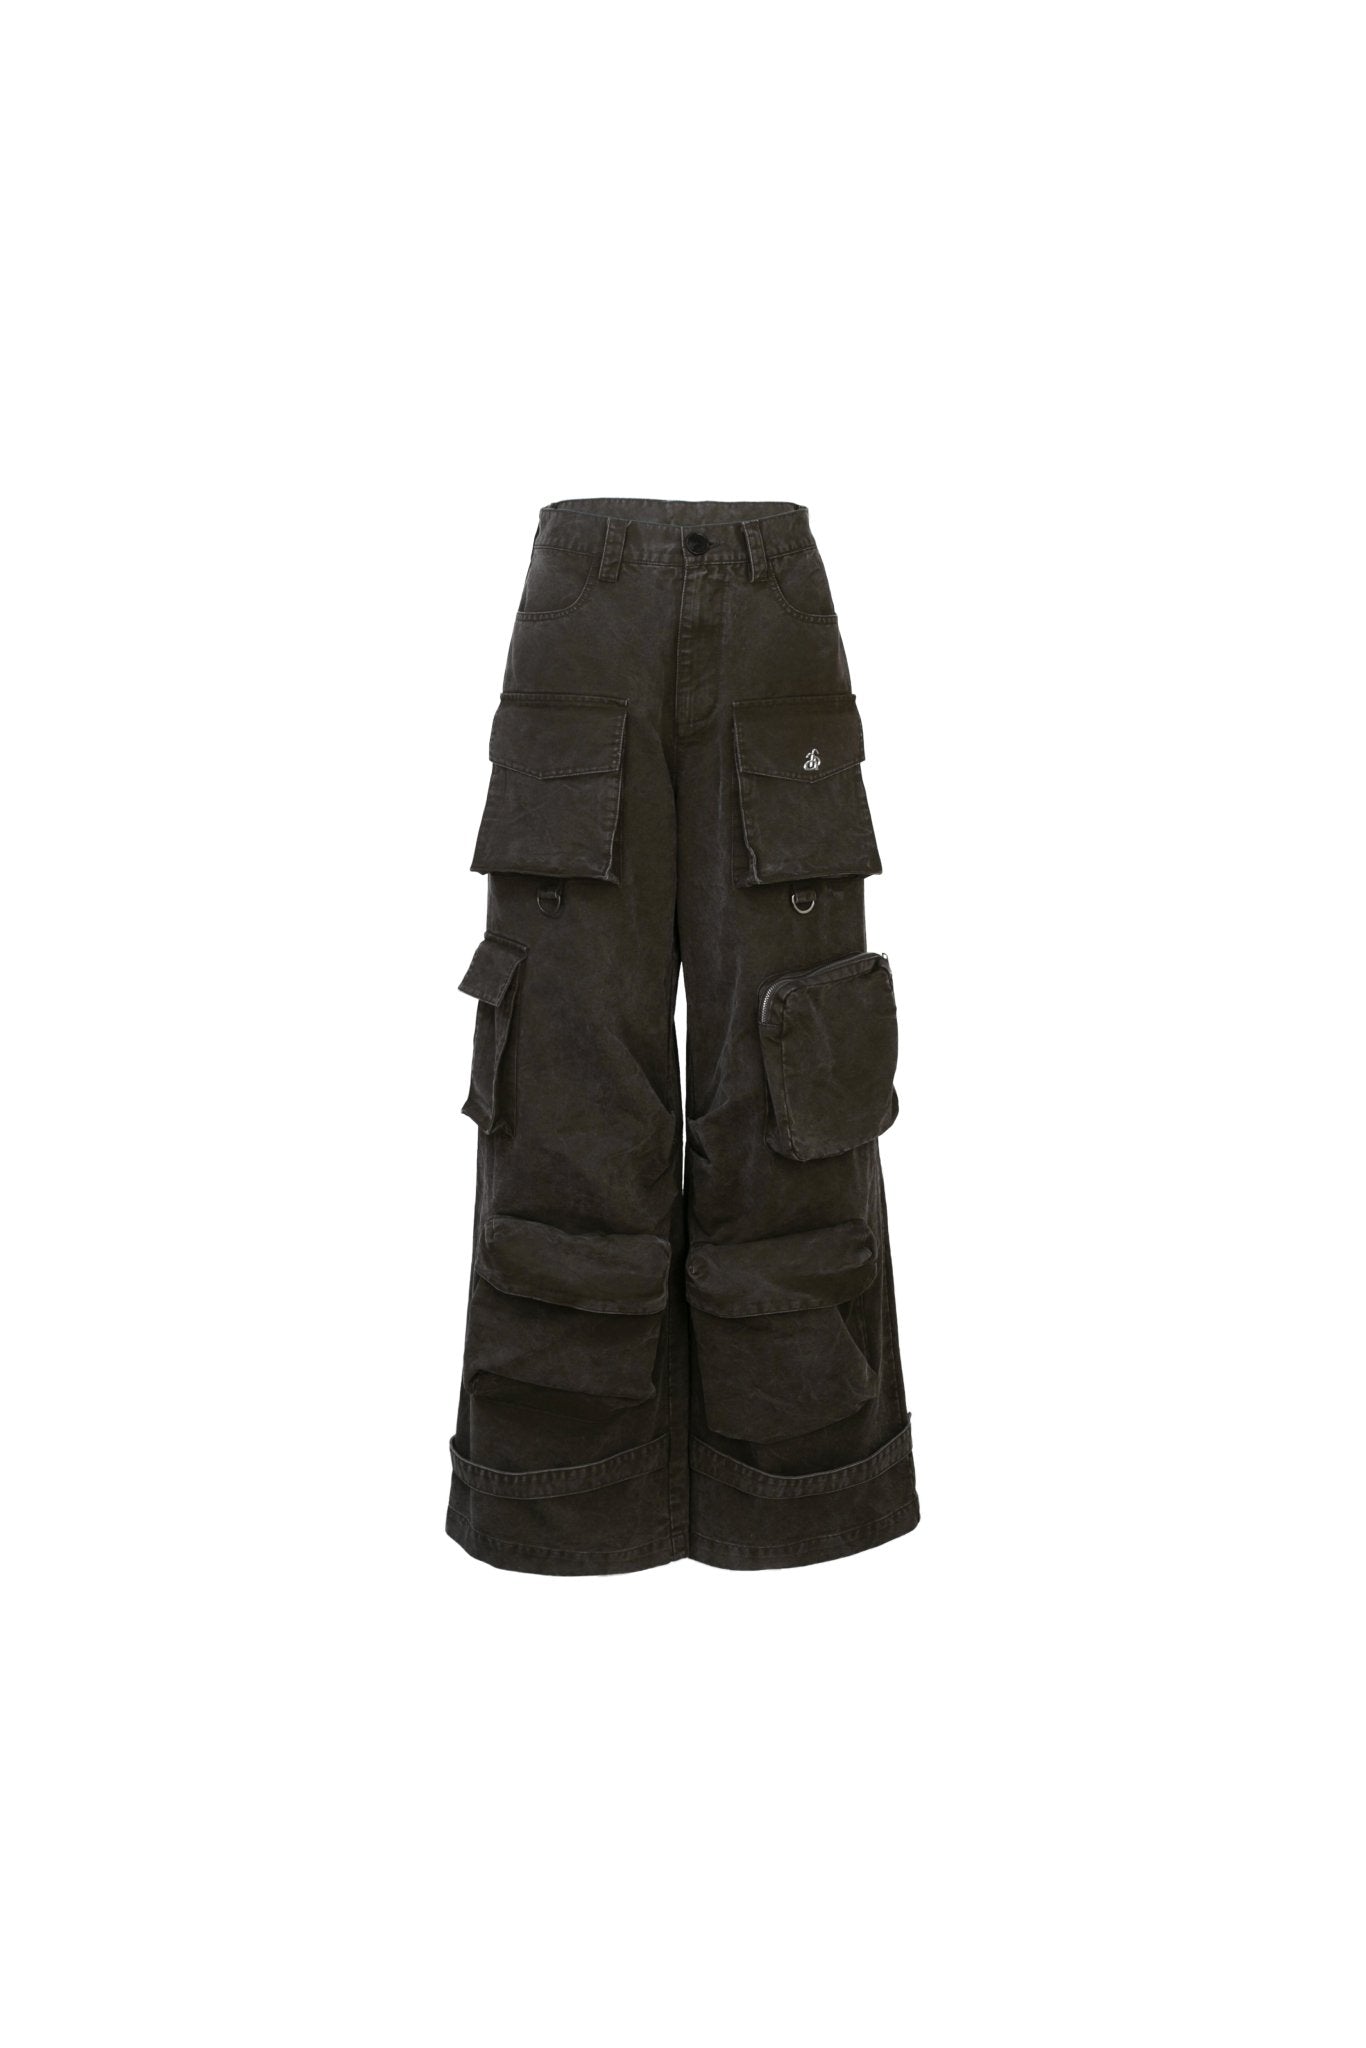 ANN ANDELMAN Multi-Pocket Wide-Leg Cargo Pants Grey